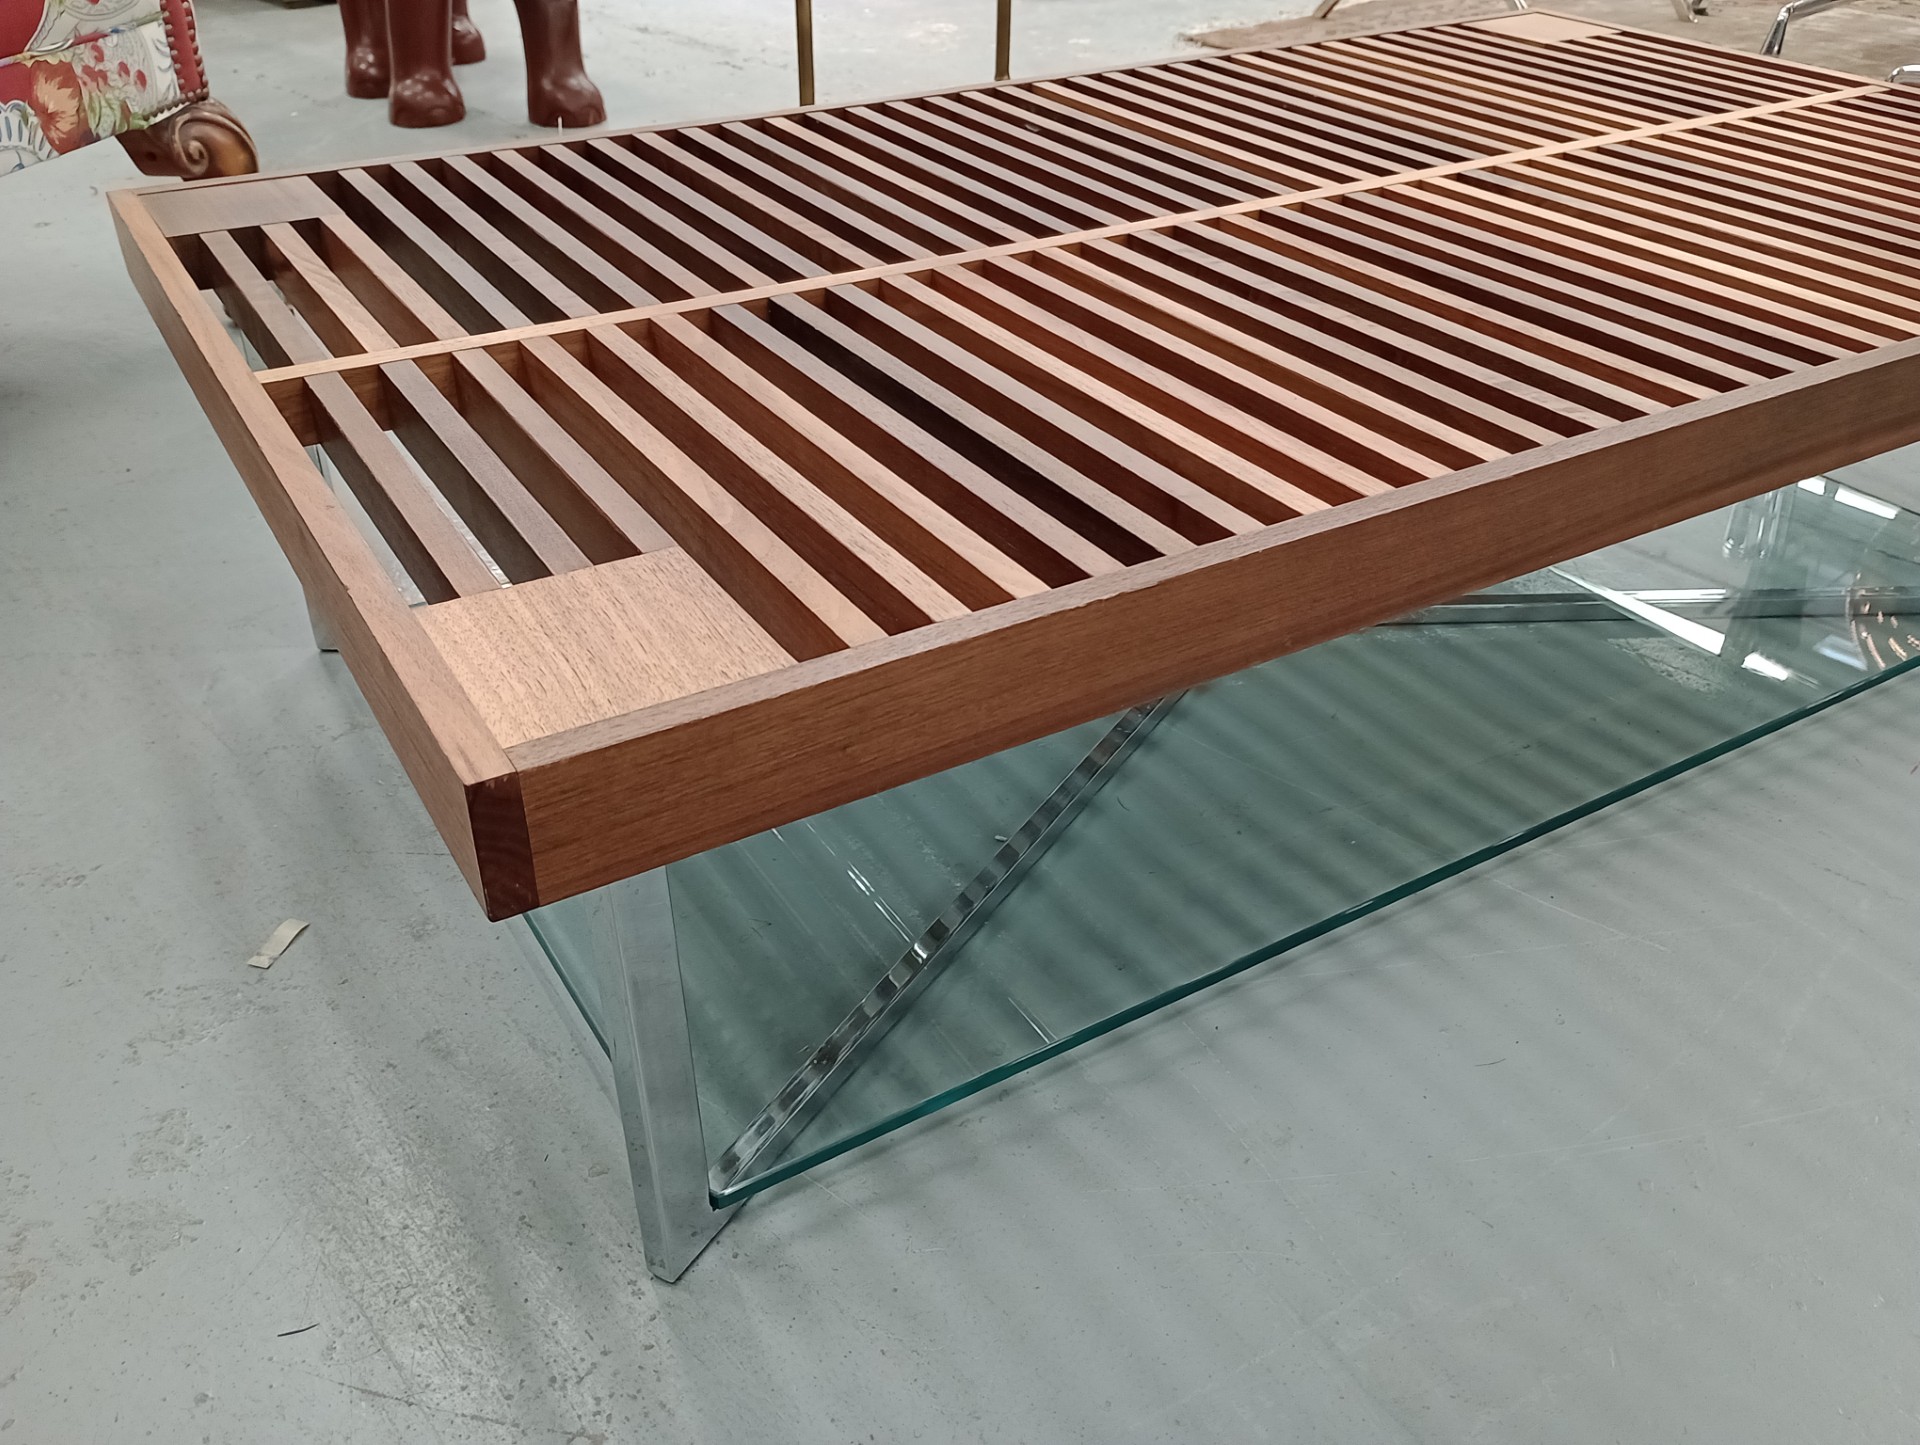 ATTRIBUTED TO LIGNE ROSET PONTON TABLE, by Osko + Deichmann, 70cm D x 120cm L x 30cm H. - Image 3 of 3